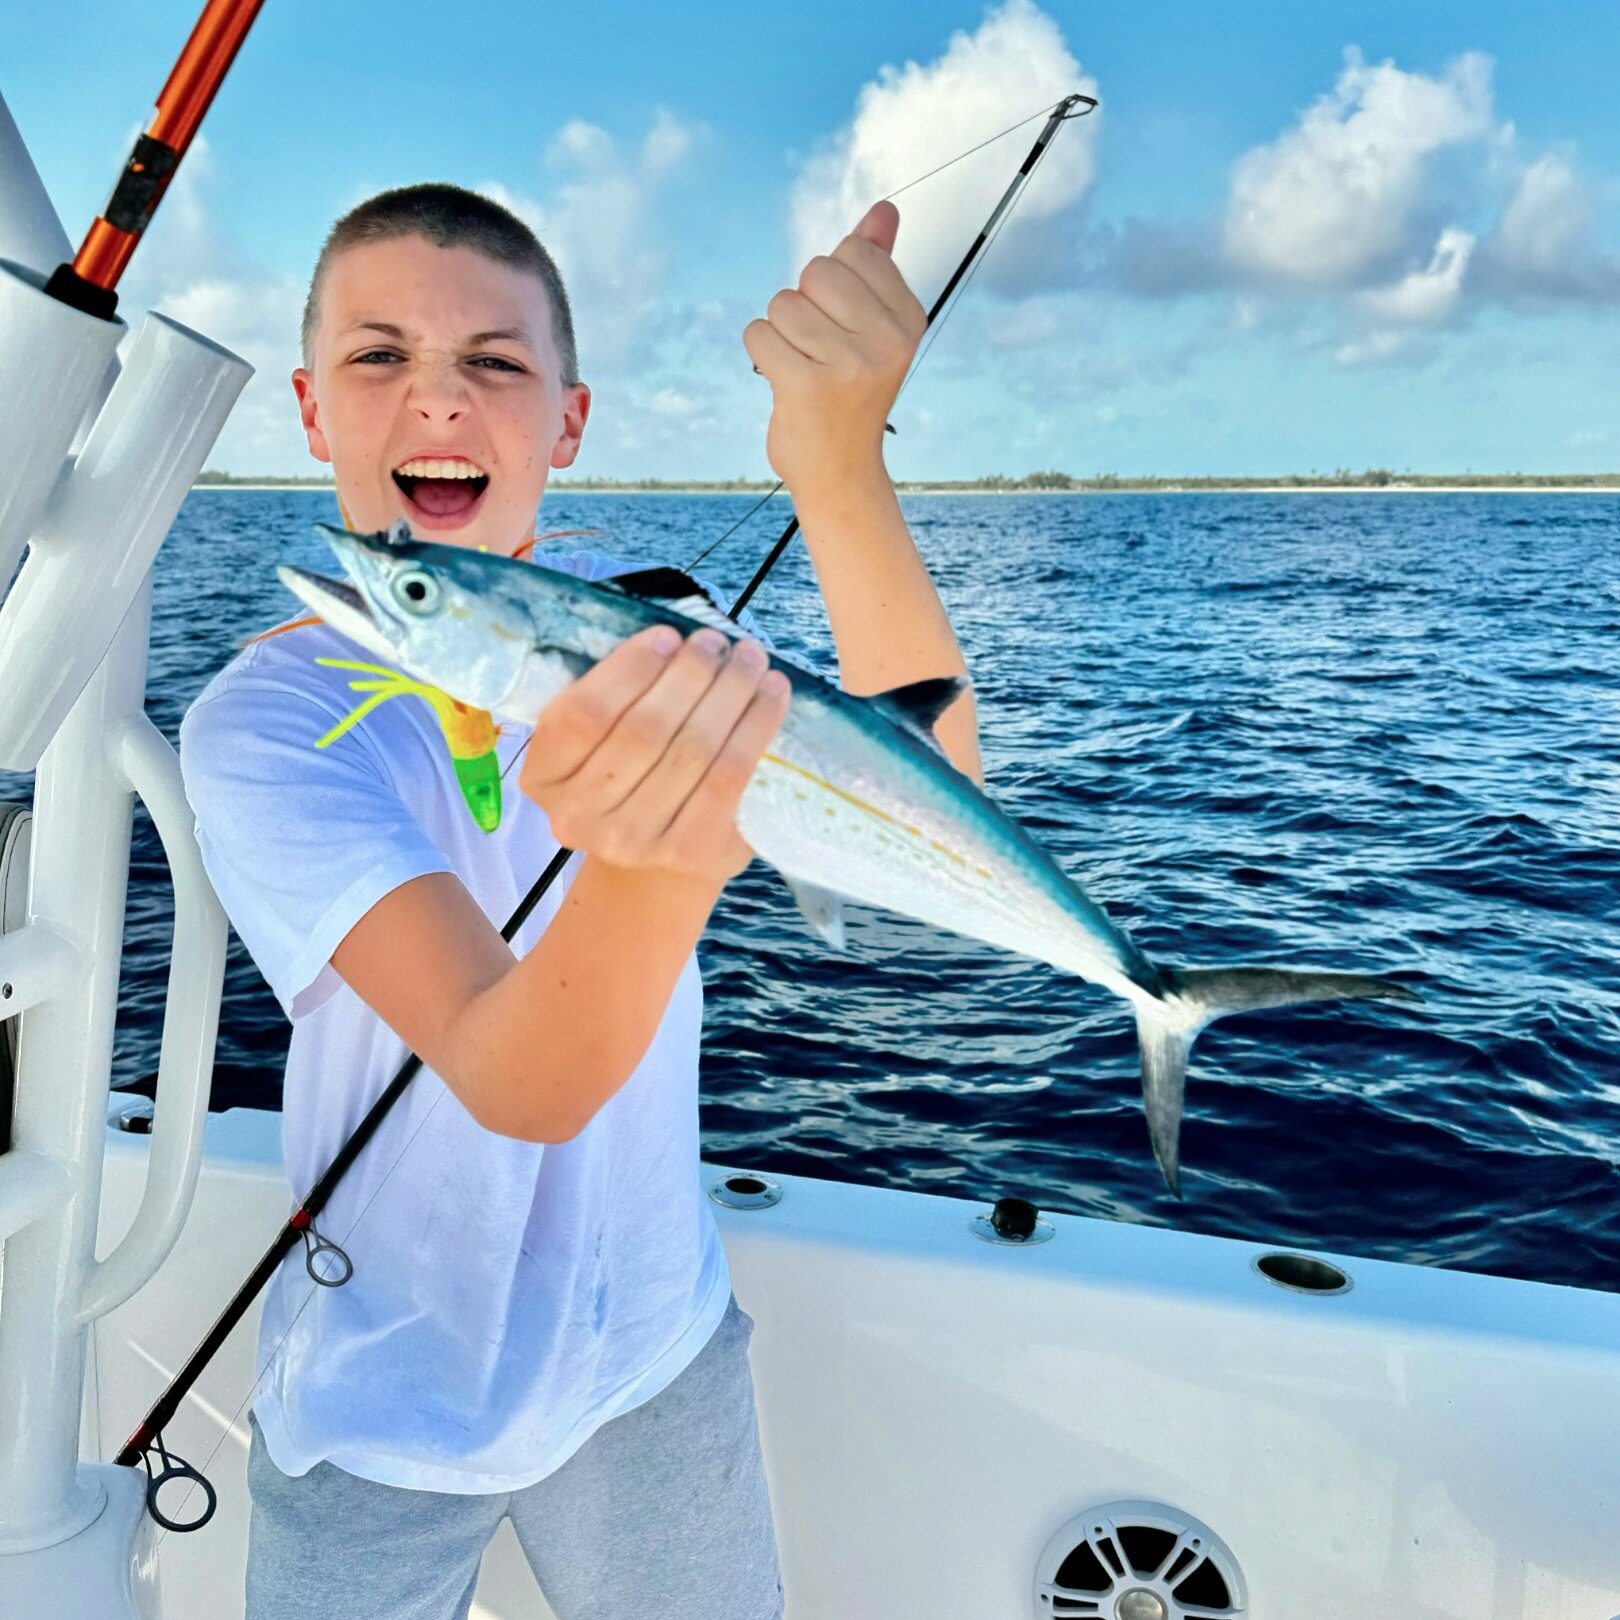 Tight lines with Linc! 🎣 #TeachABoyToFish #Bahamas #Fishing